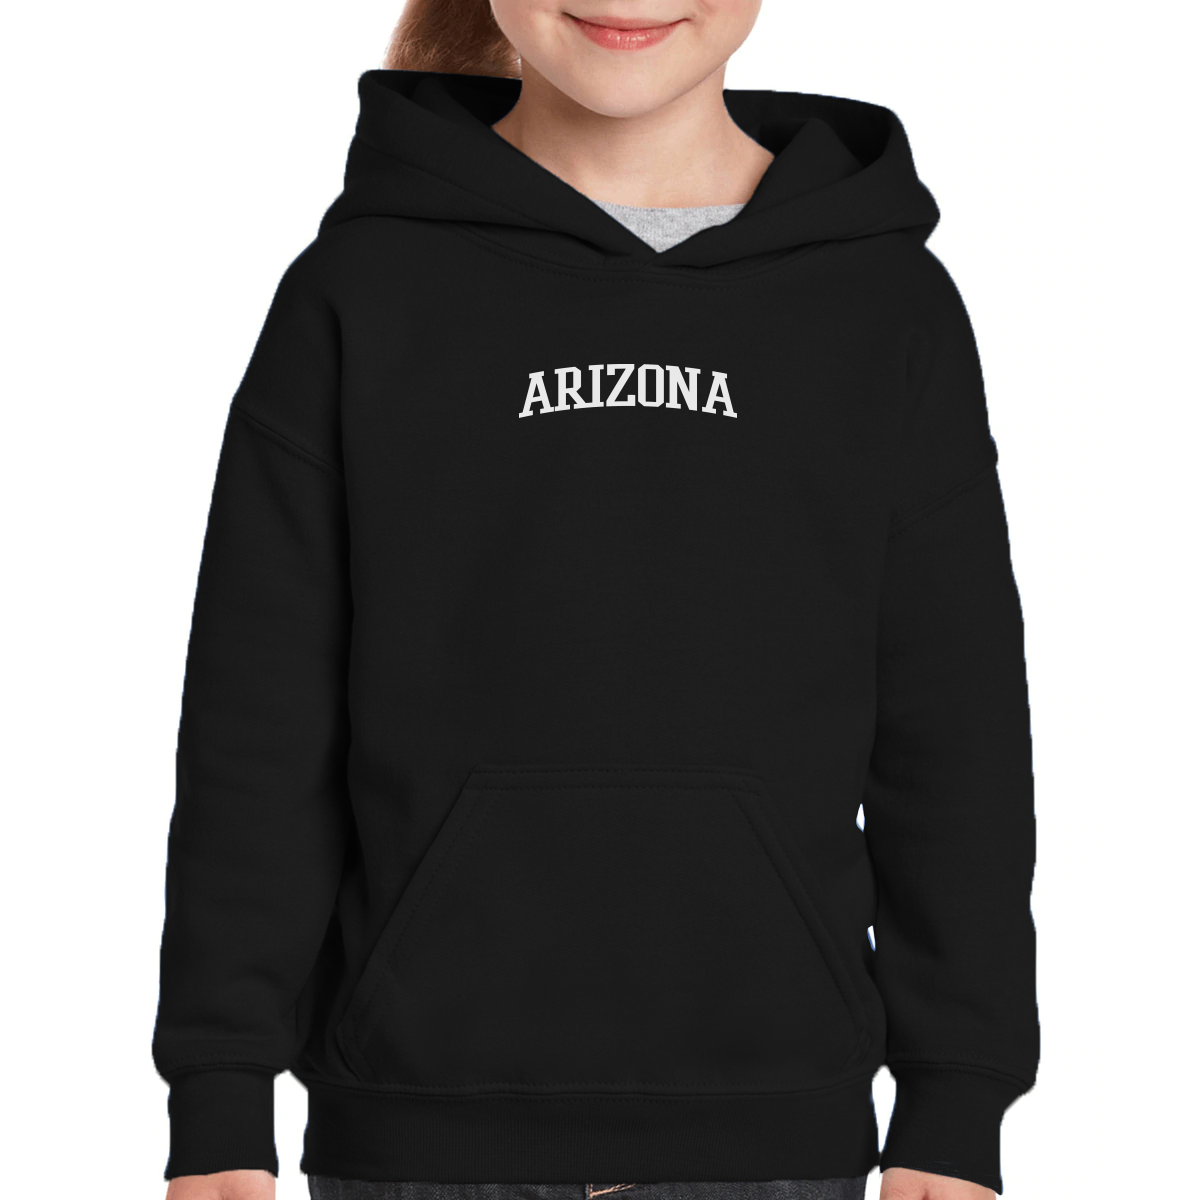 Arizona Kids Hoodie | Black